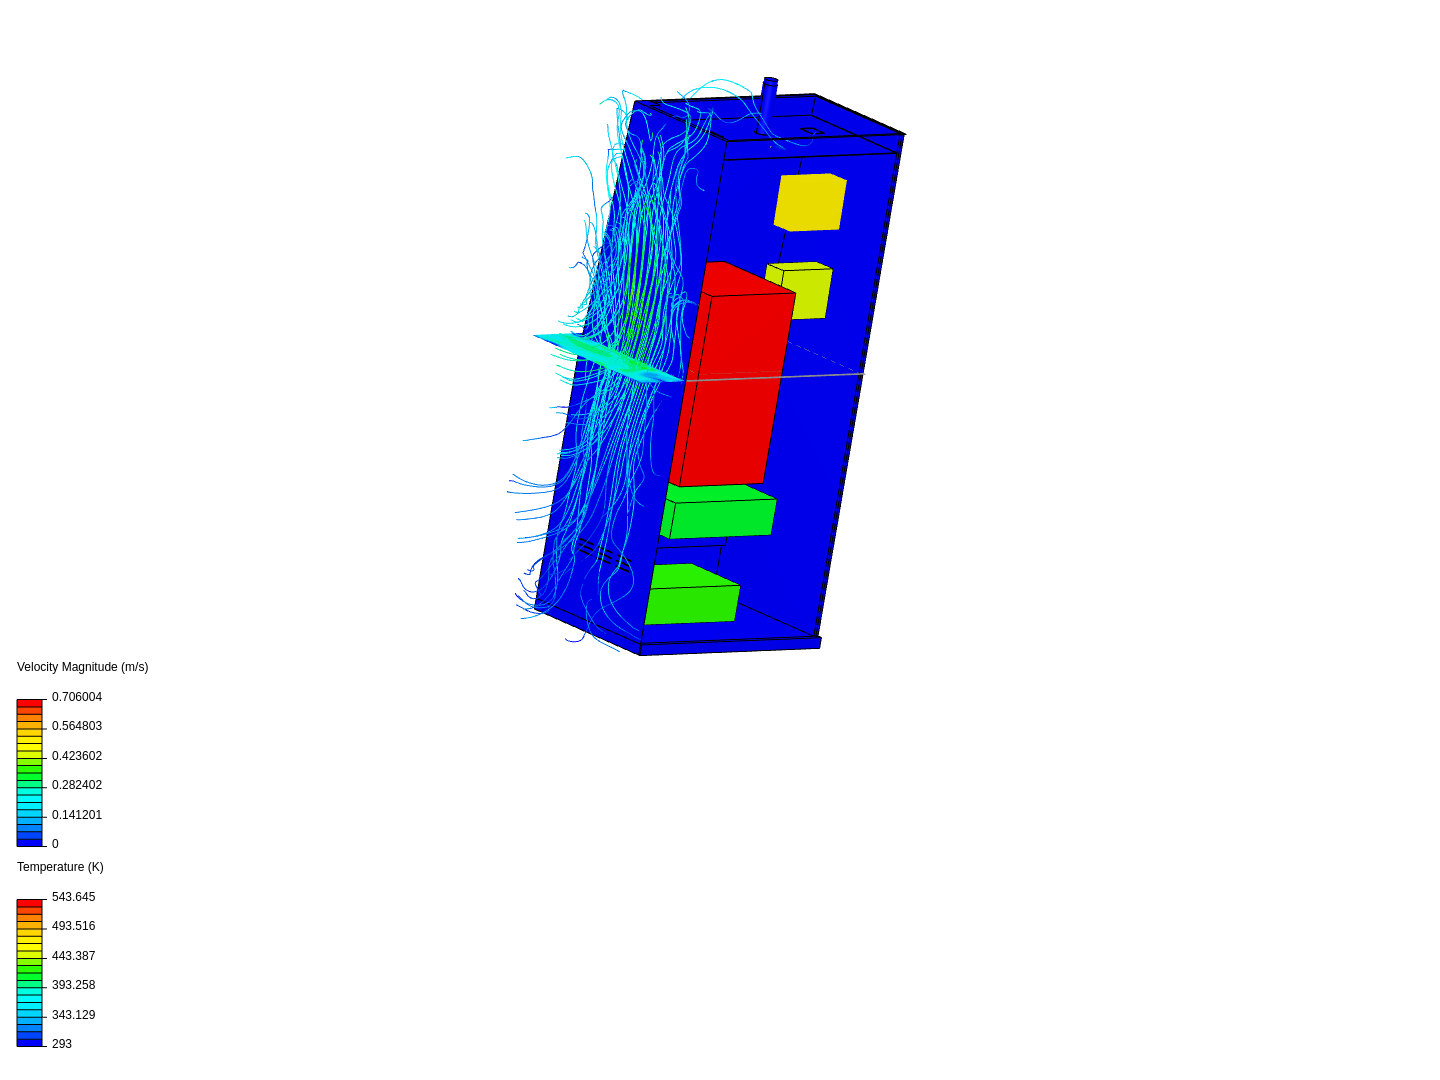 Thermal Box 3 image